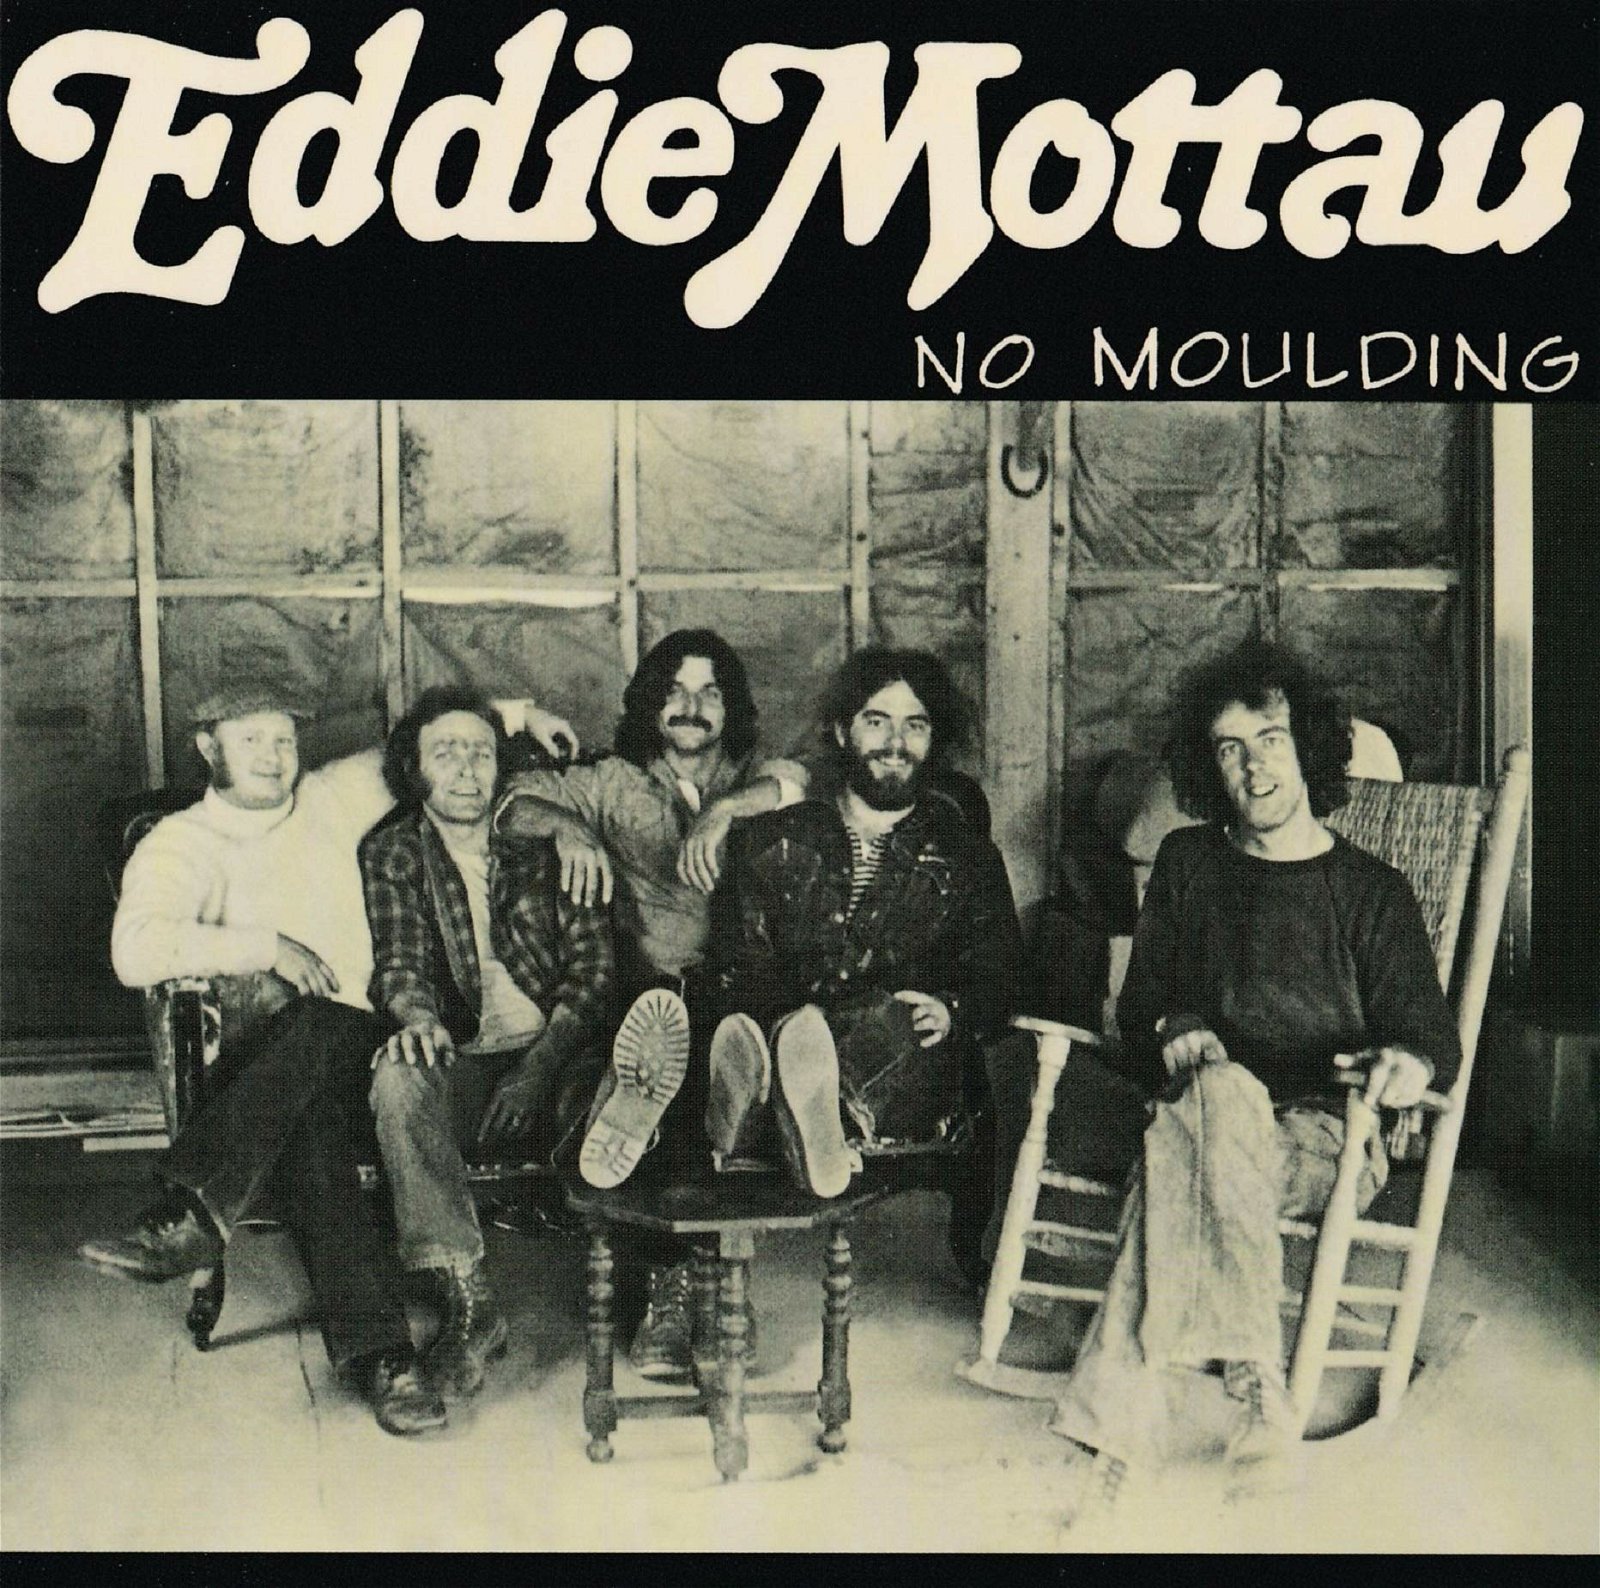 CD Shop - MOTTAU, EDDIE NO MOULDING